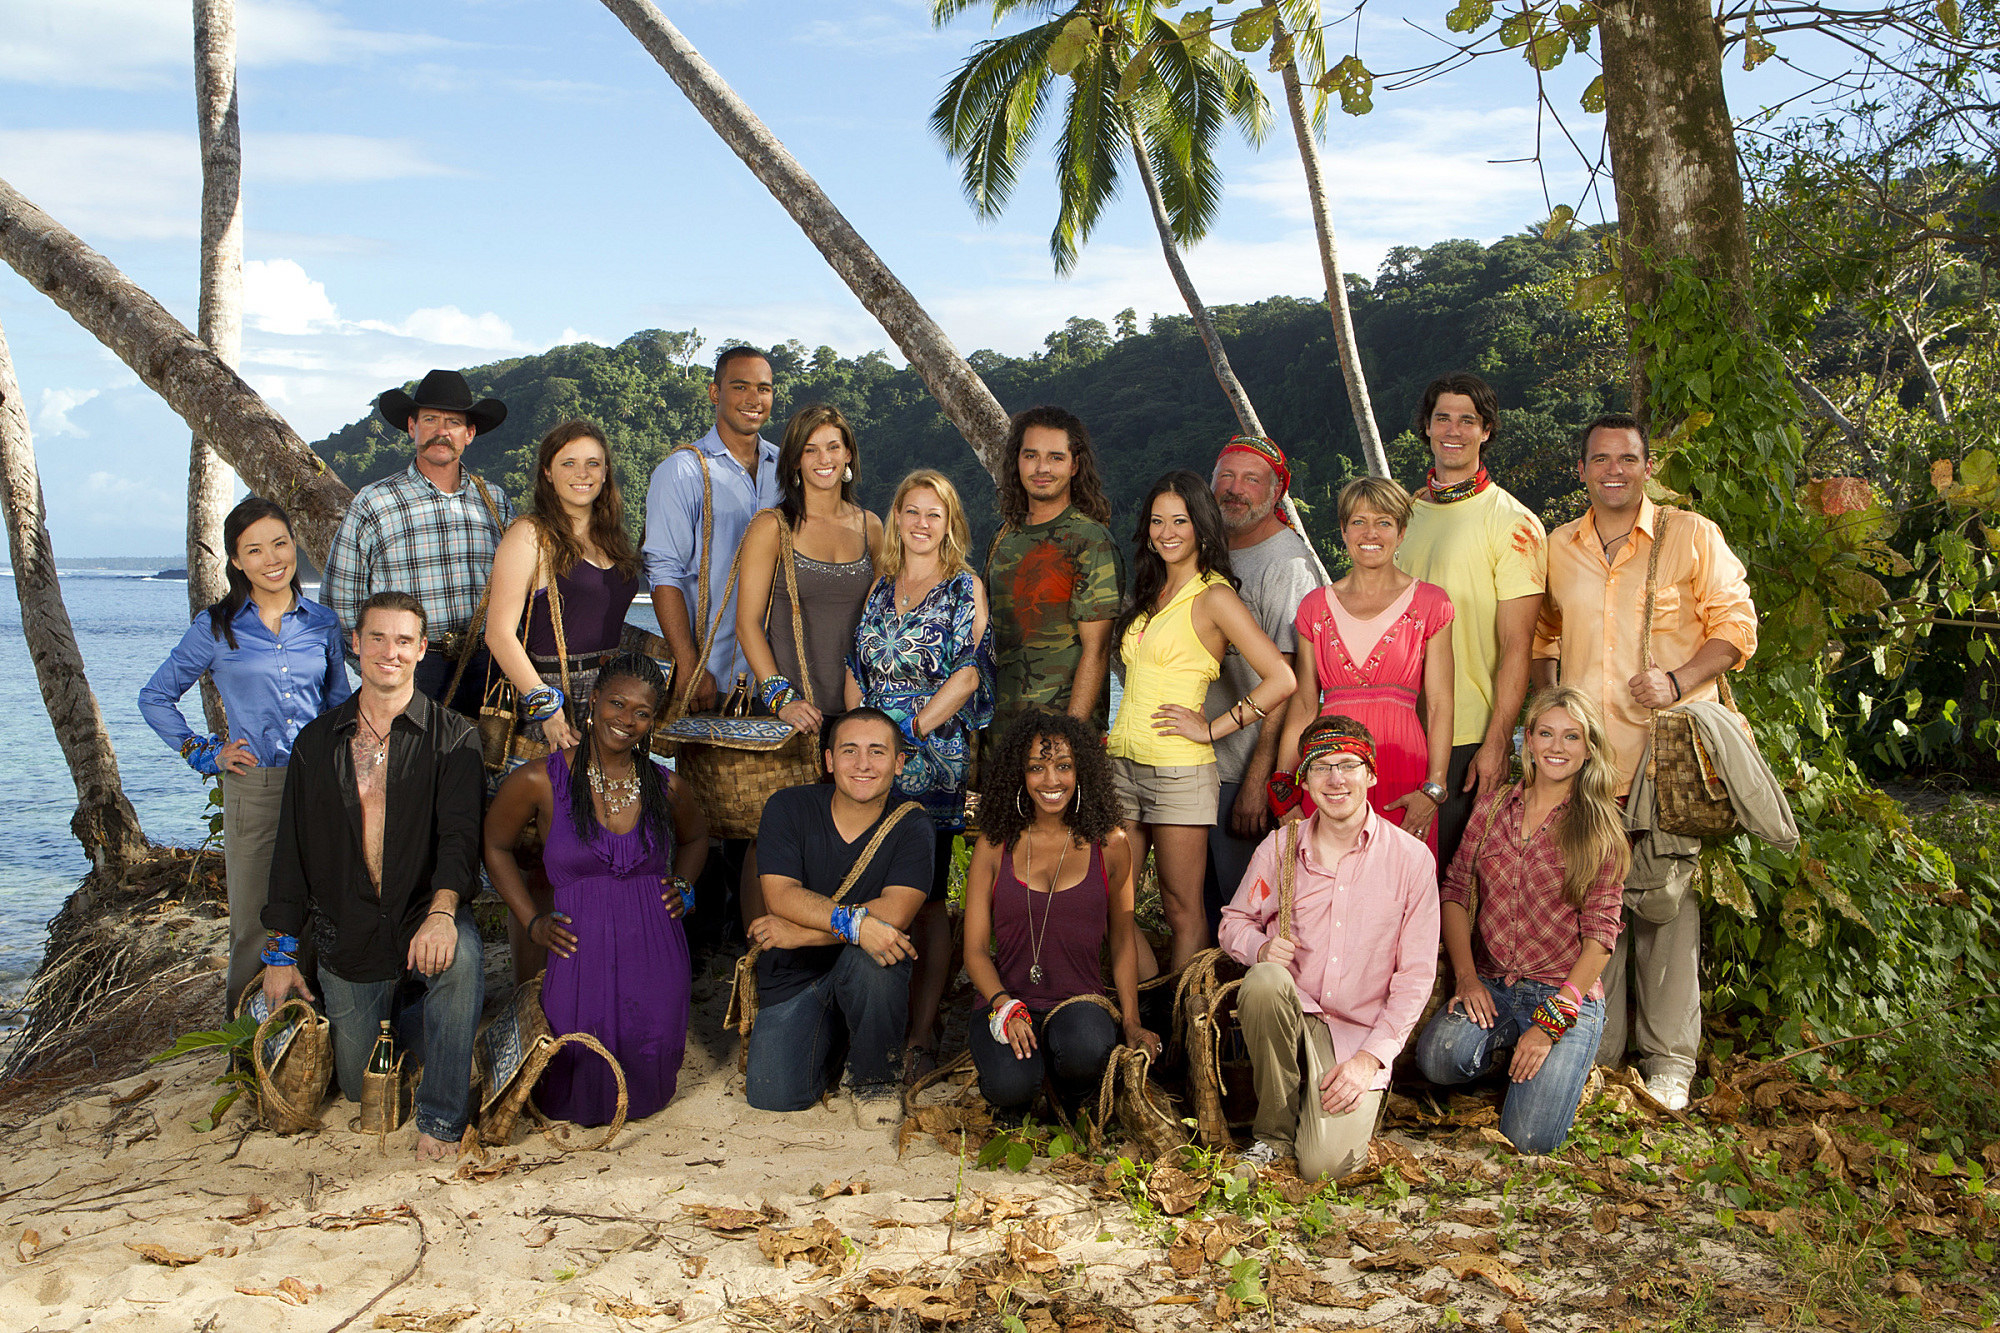 The cast of Survivor: South Pacific